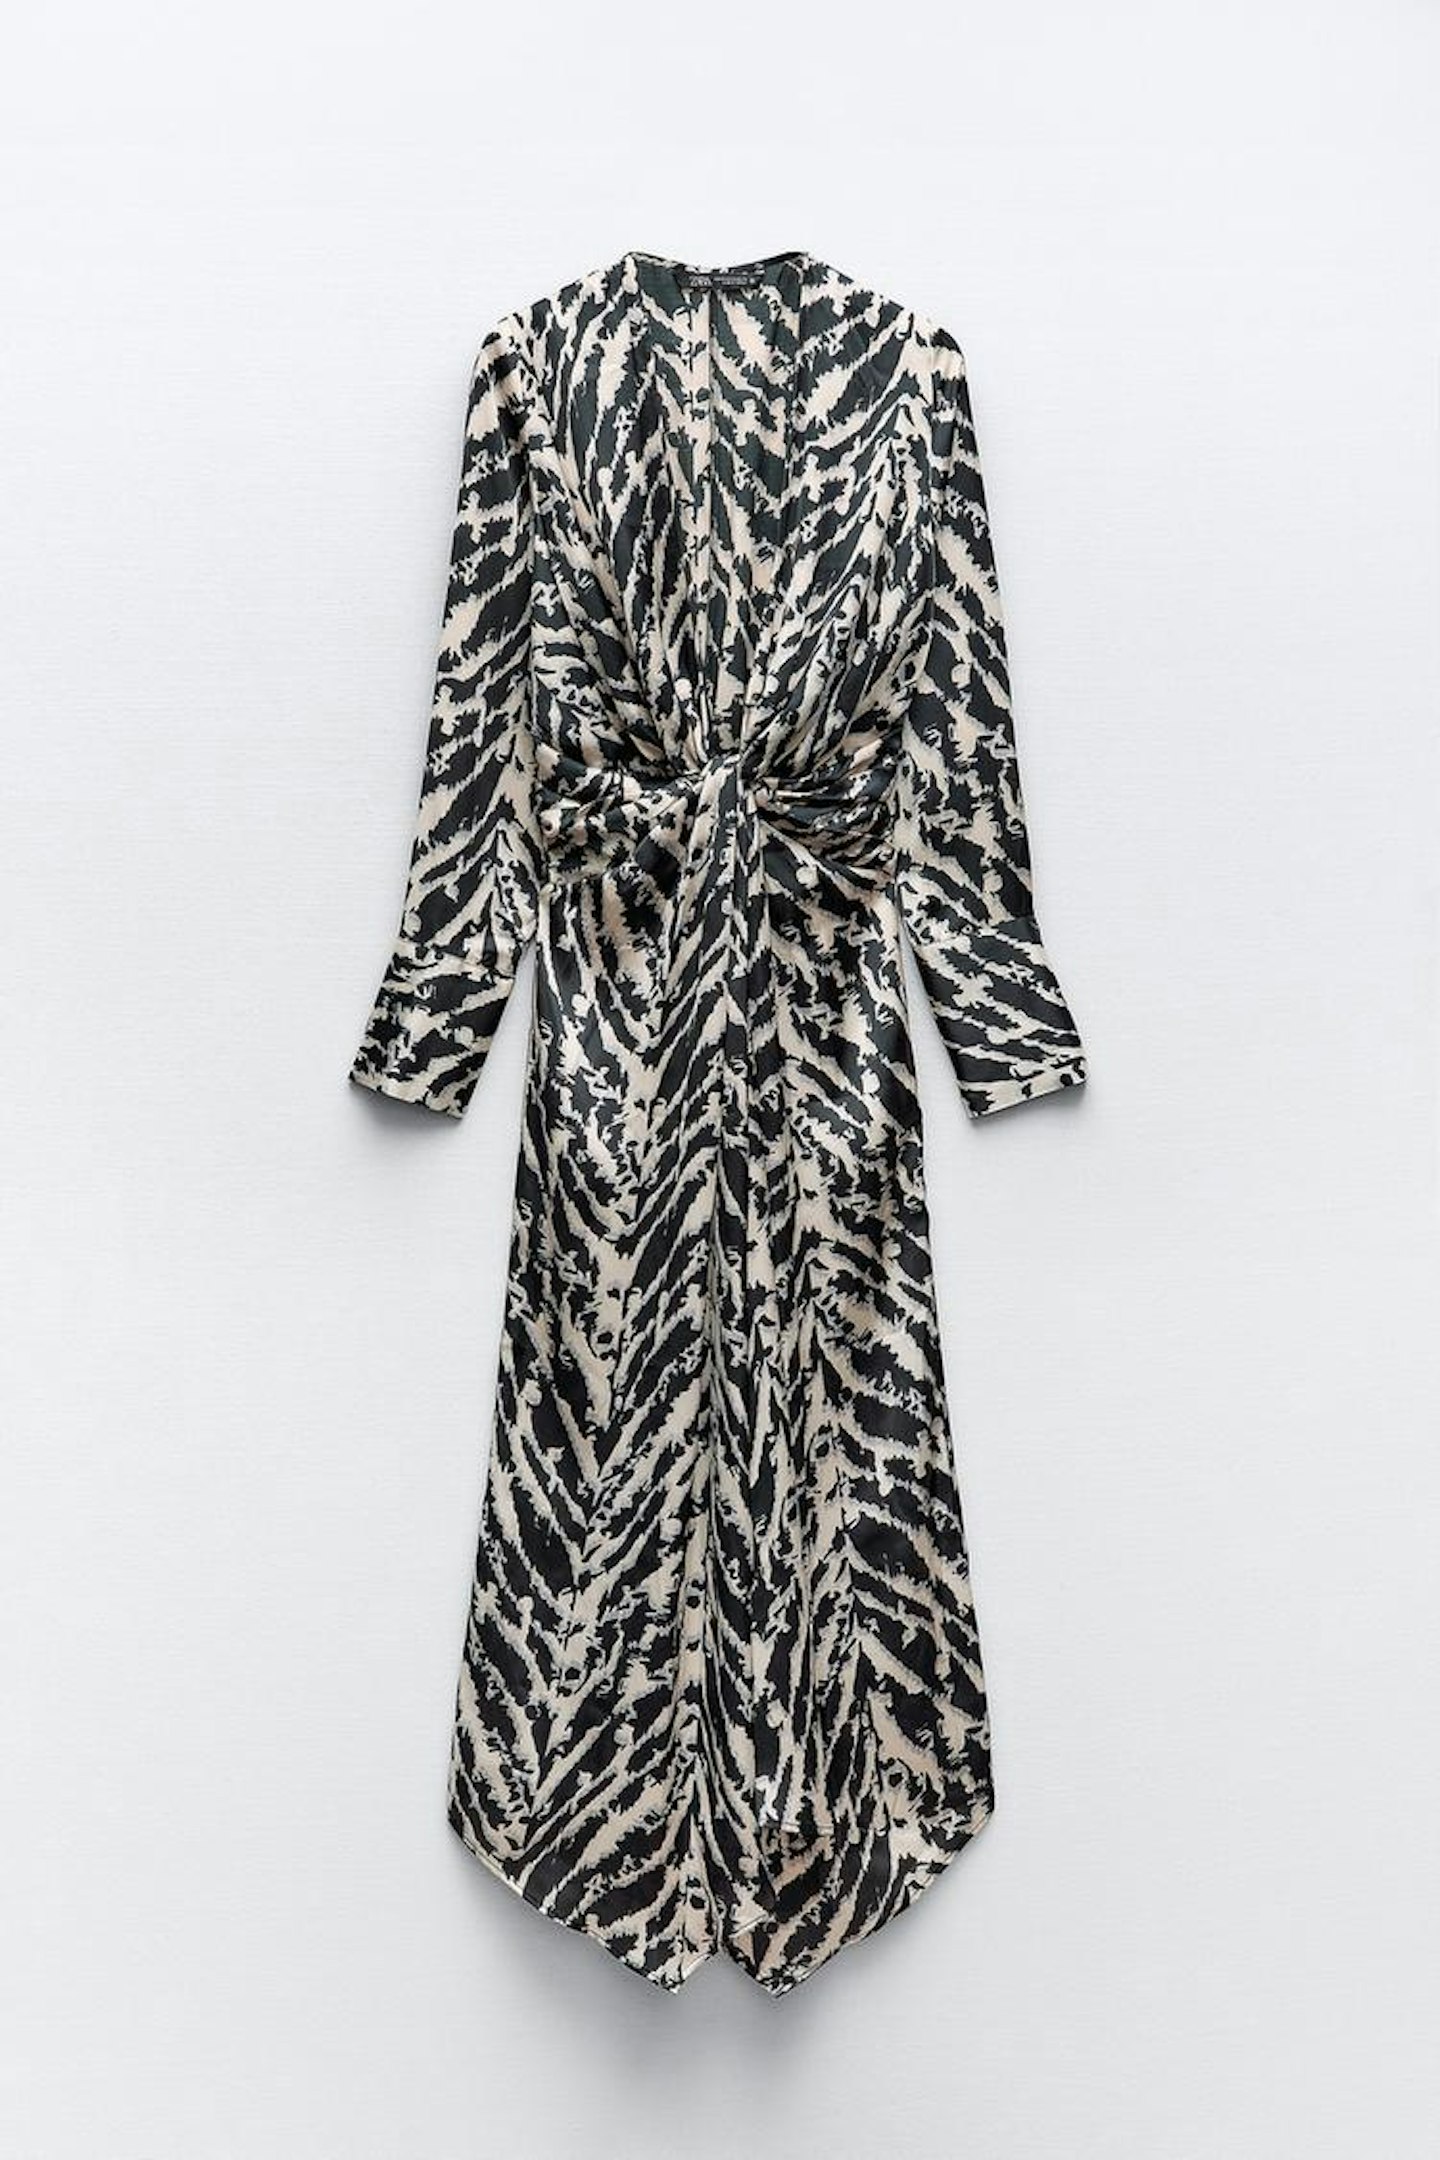 Zara, Satin Animal Print Dress